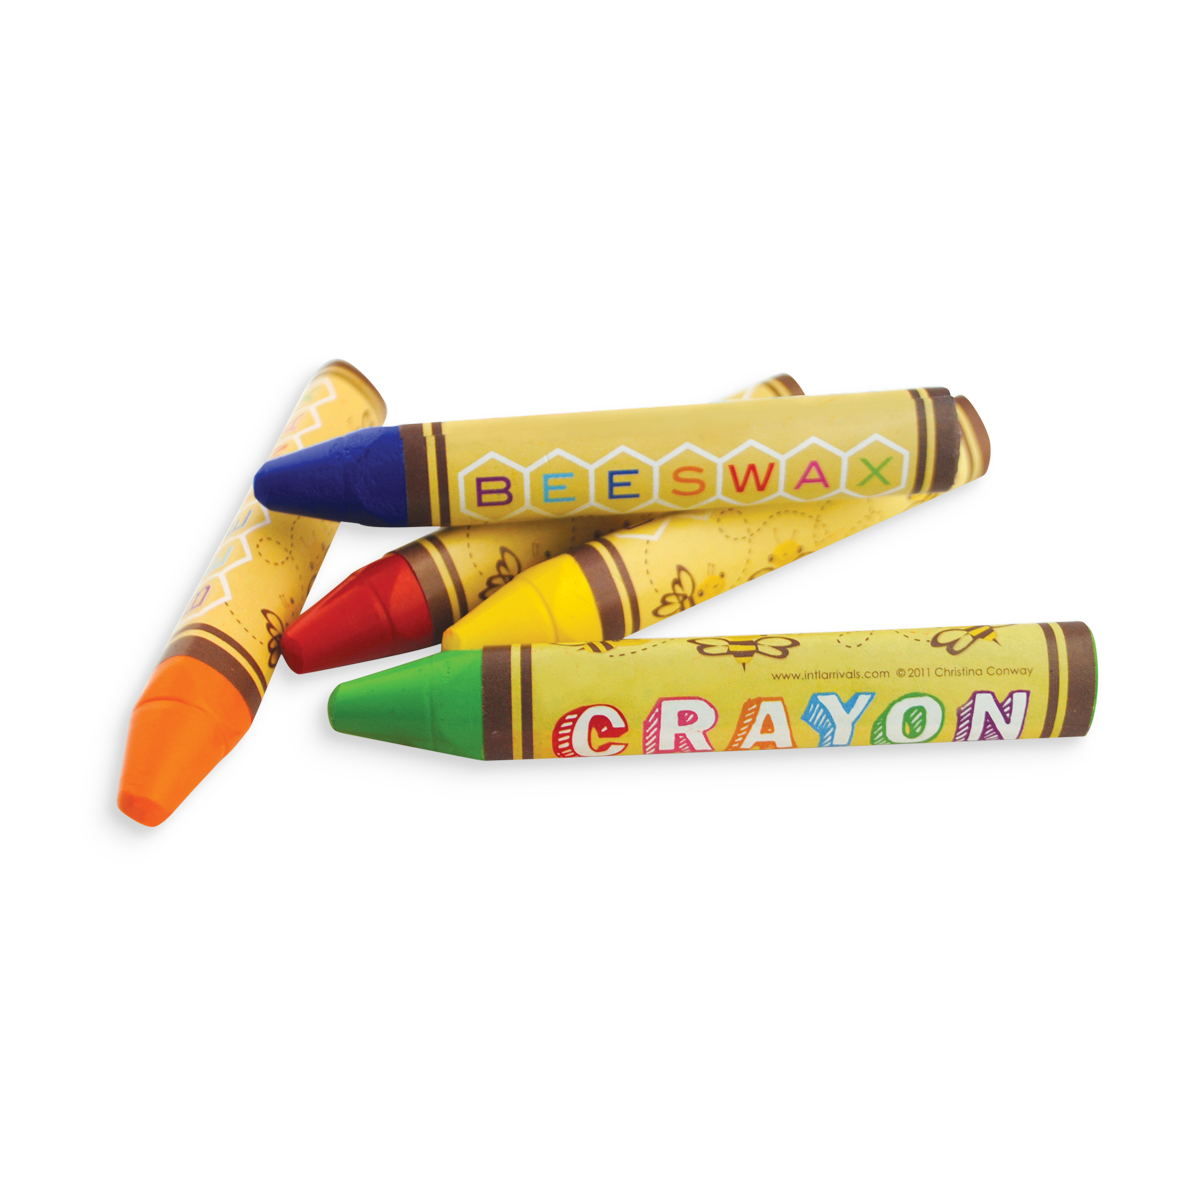 Transparent Multicolor Ballpoint Pen - Brilliant Promos - Be Brilliant!